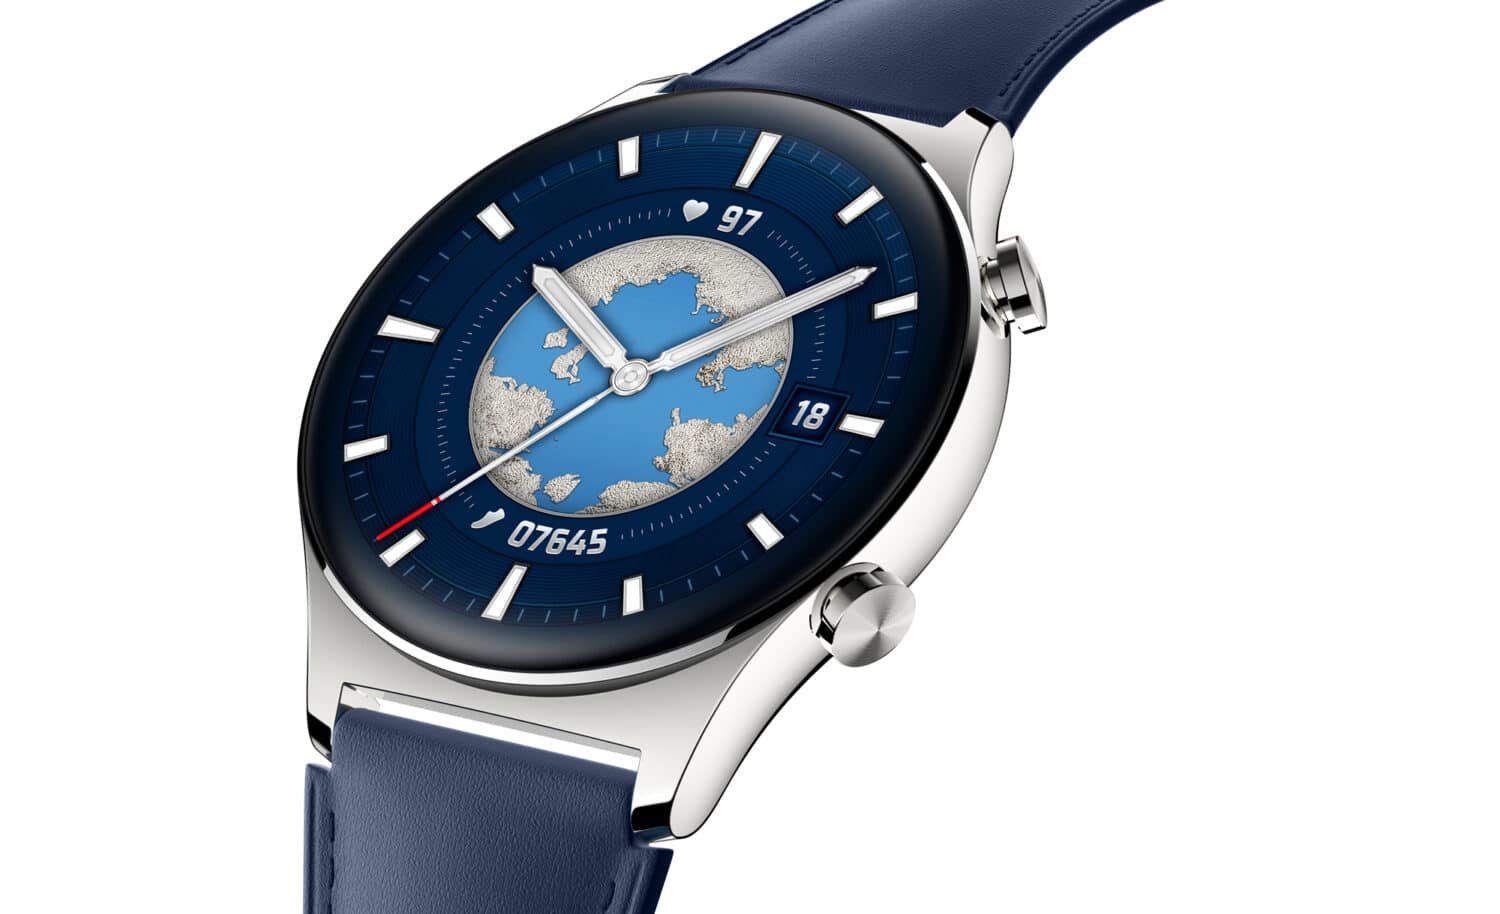 HONOR-Watch-GS-3-montre-connectee